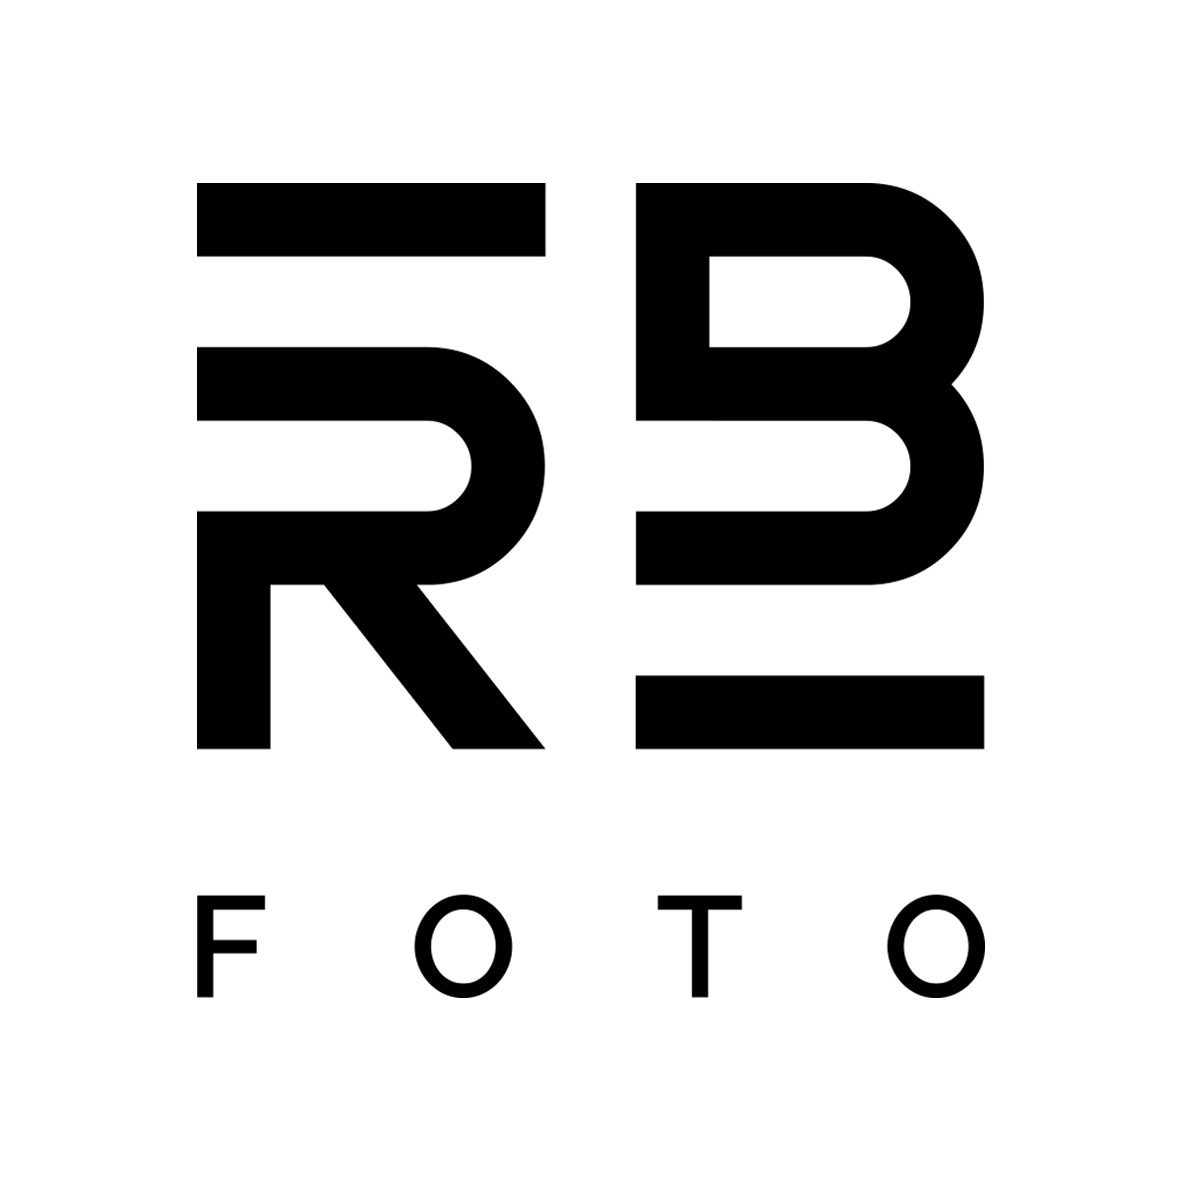 RBfoto logo.jpg